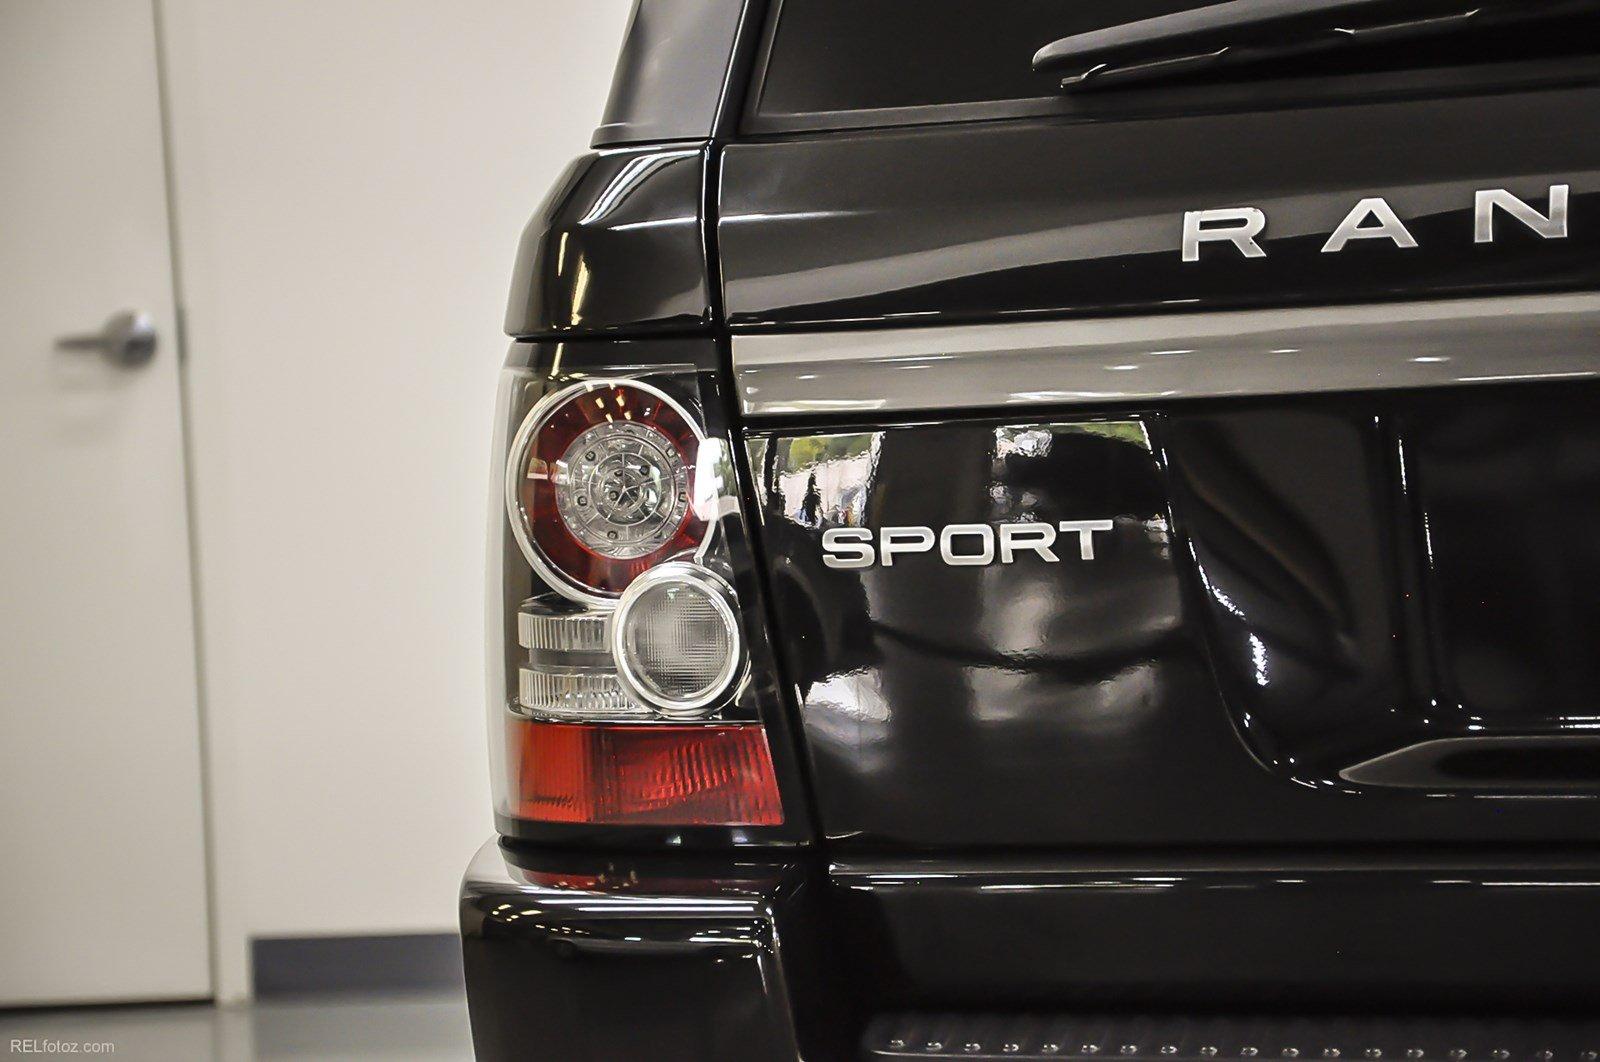 Used 2012 Land Rover Range Rover Sport HSE for sale Sold at Gravity Autos Marietta in Marietta GA 30060 7